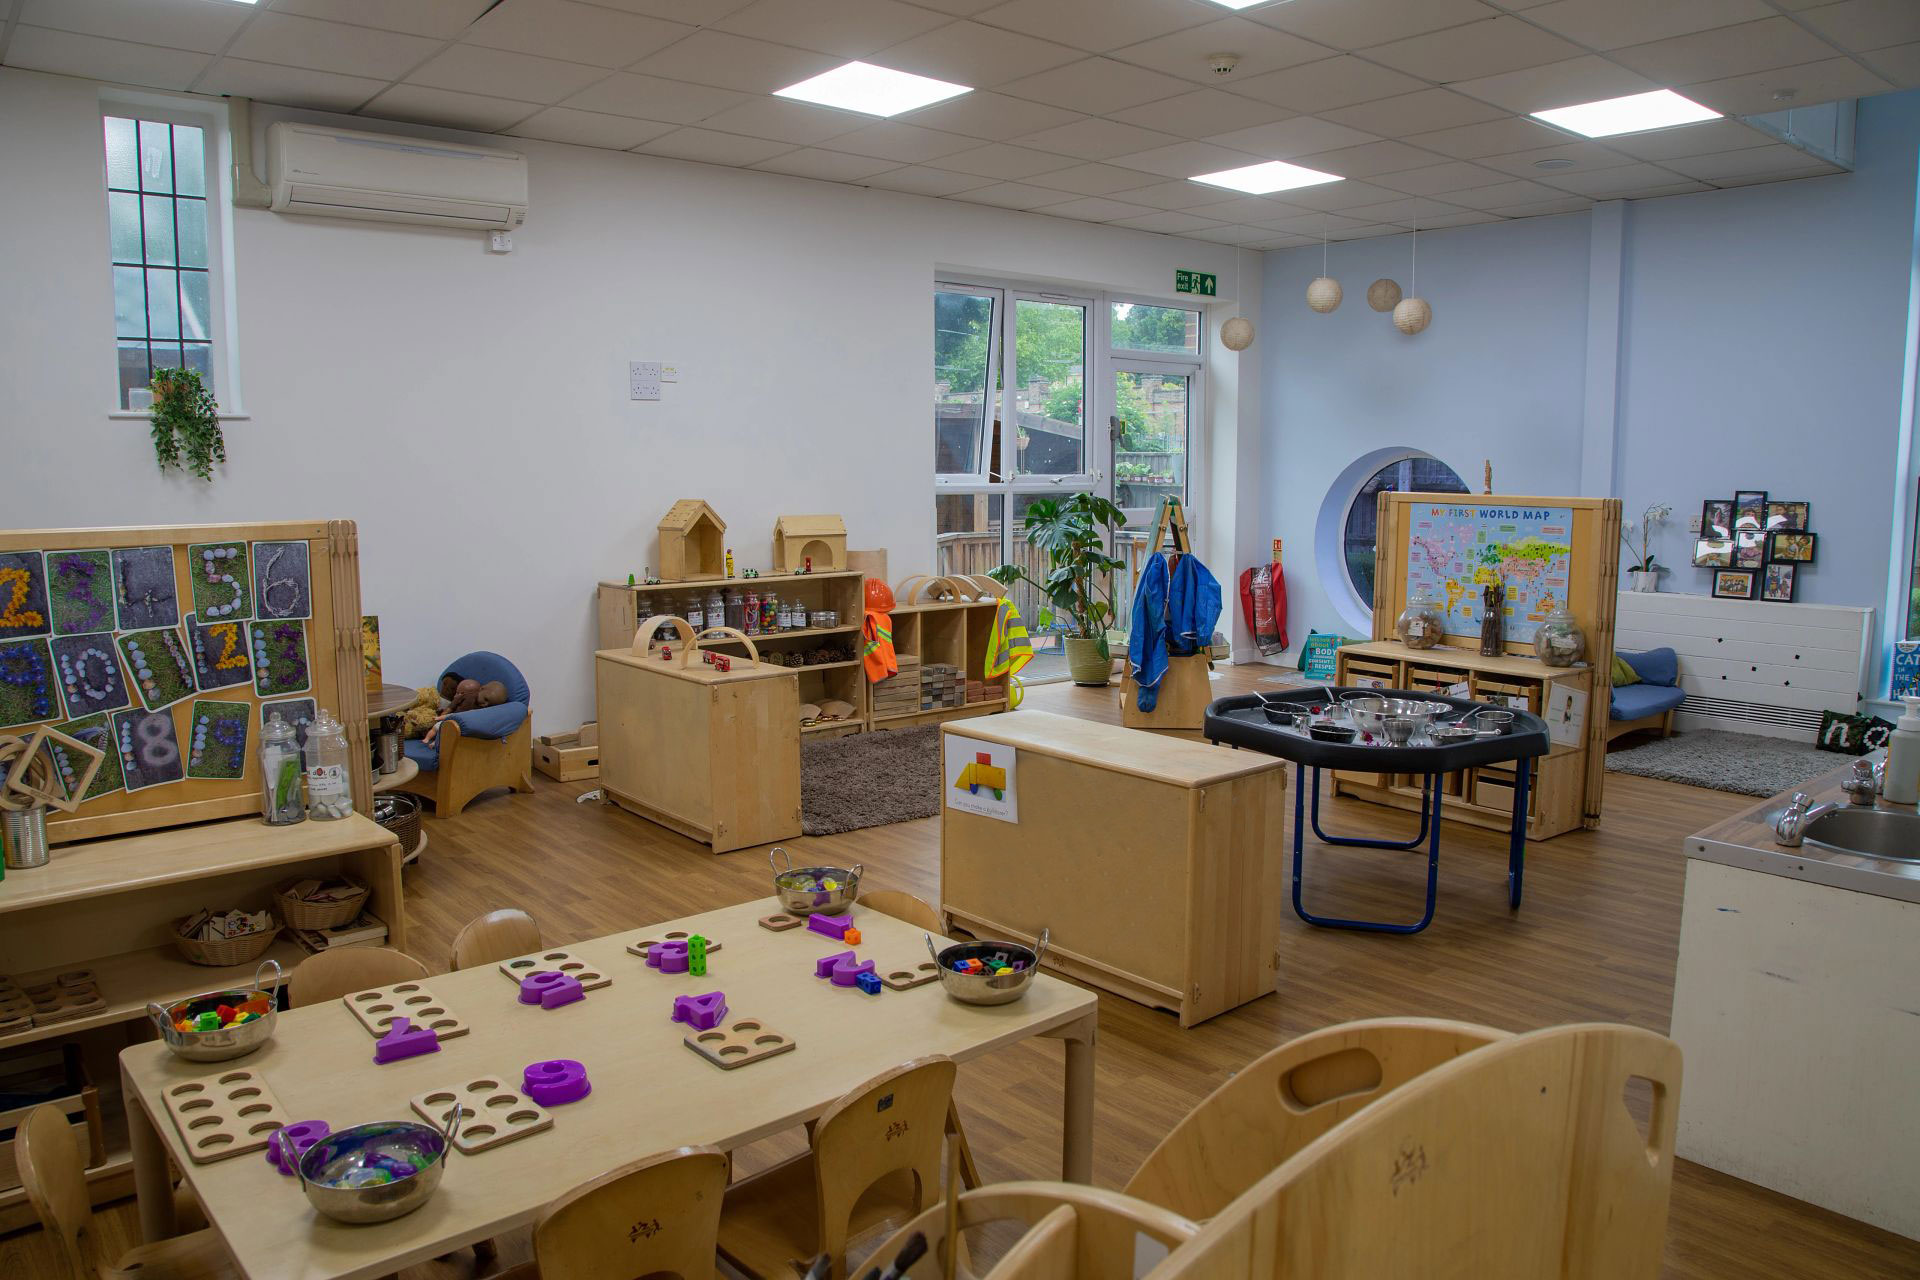 West Norwood Day Nursery and Preschool room